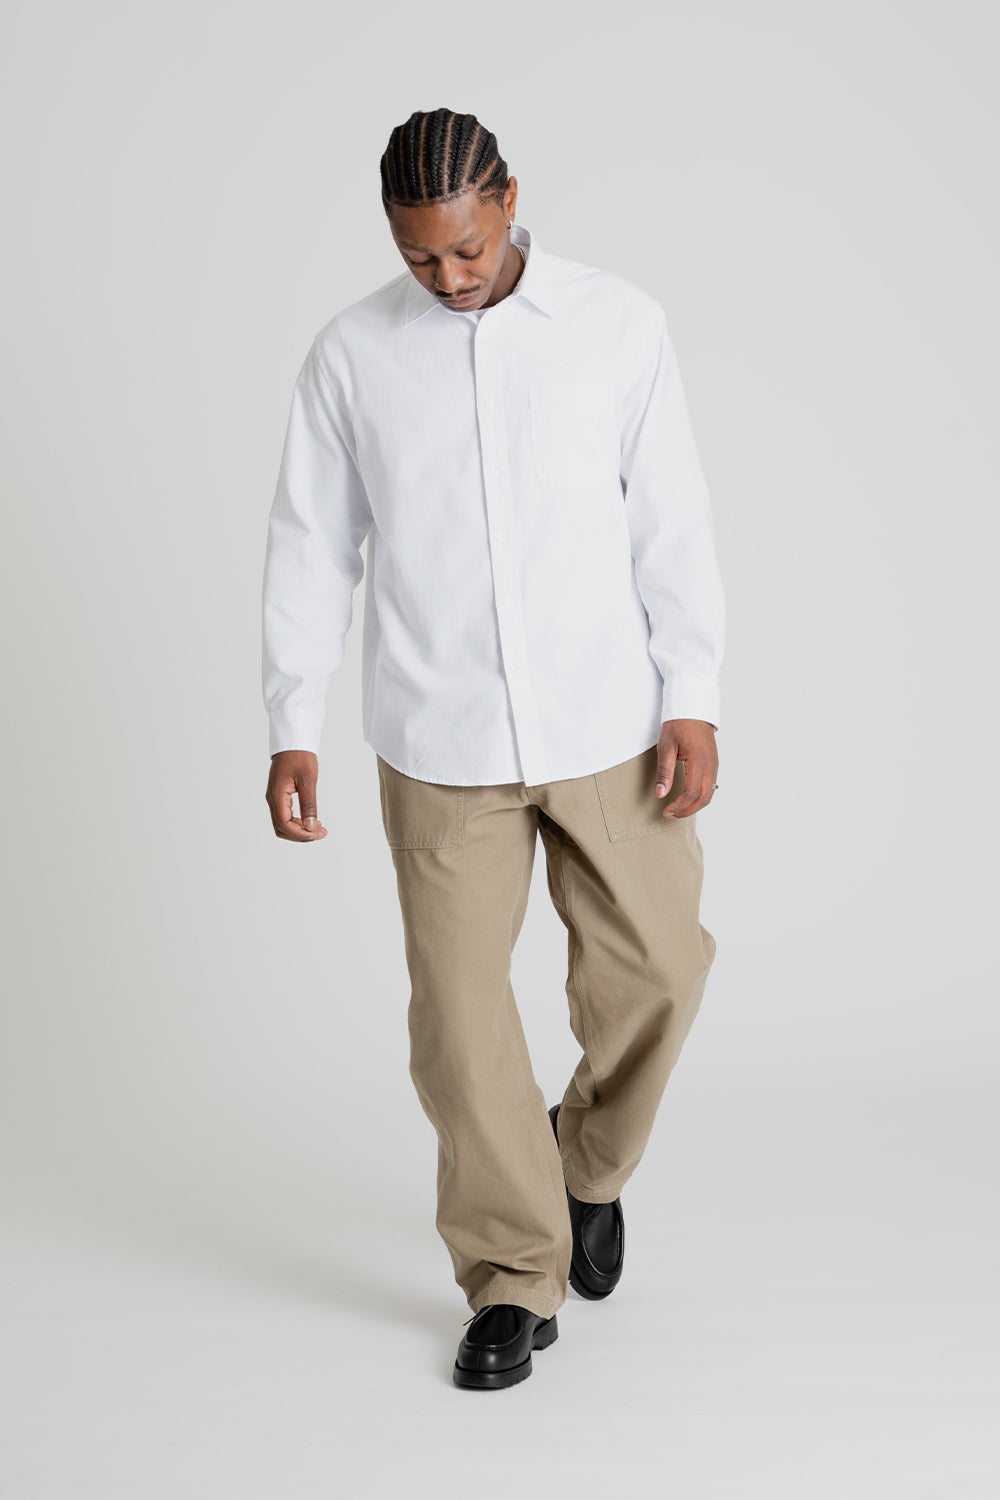 Frizmworks OG Oxford Oversized Shirt White Front